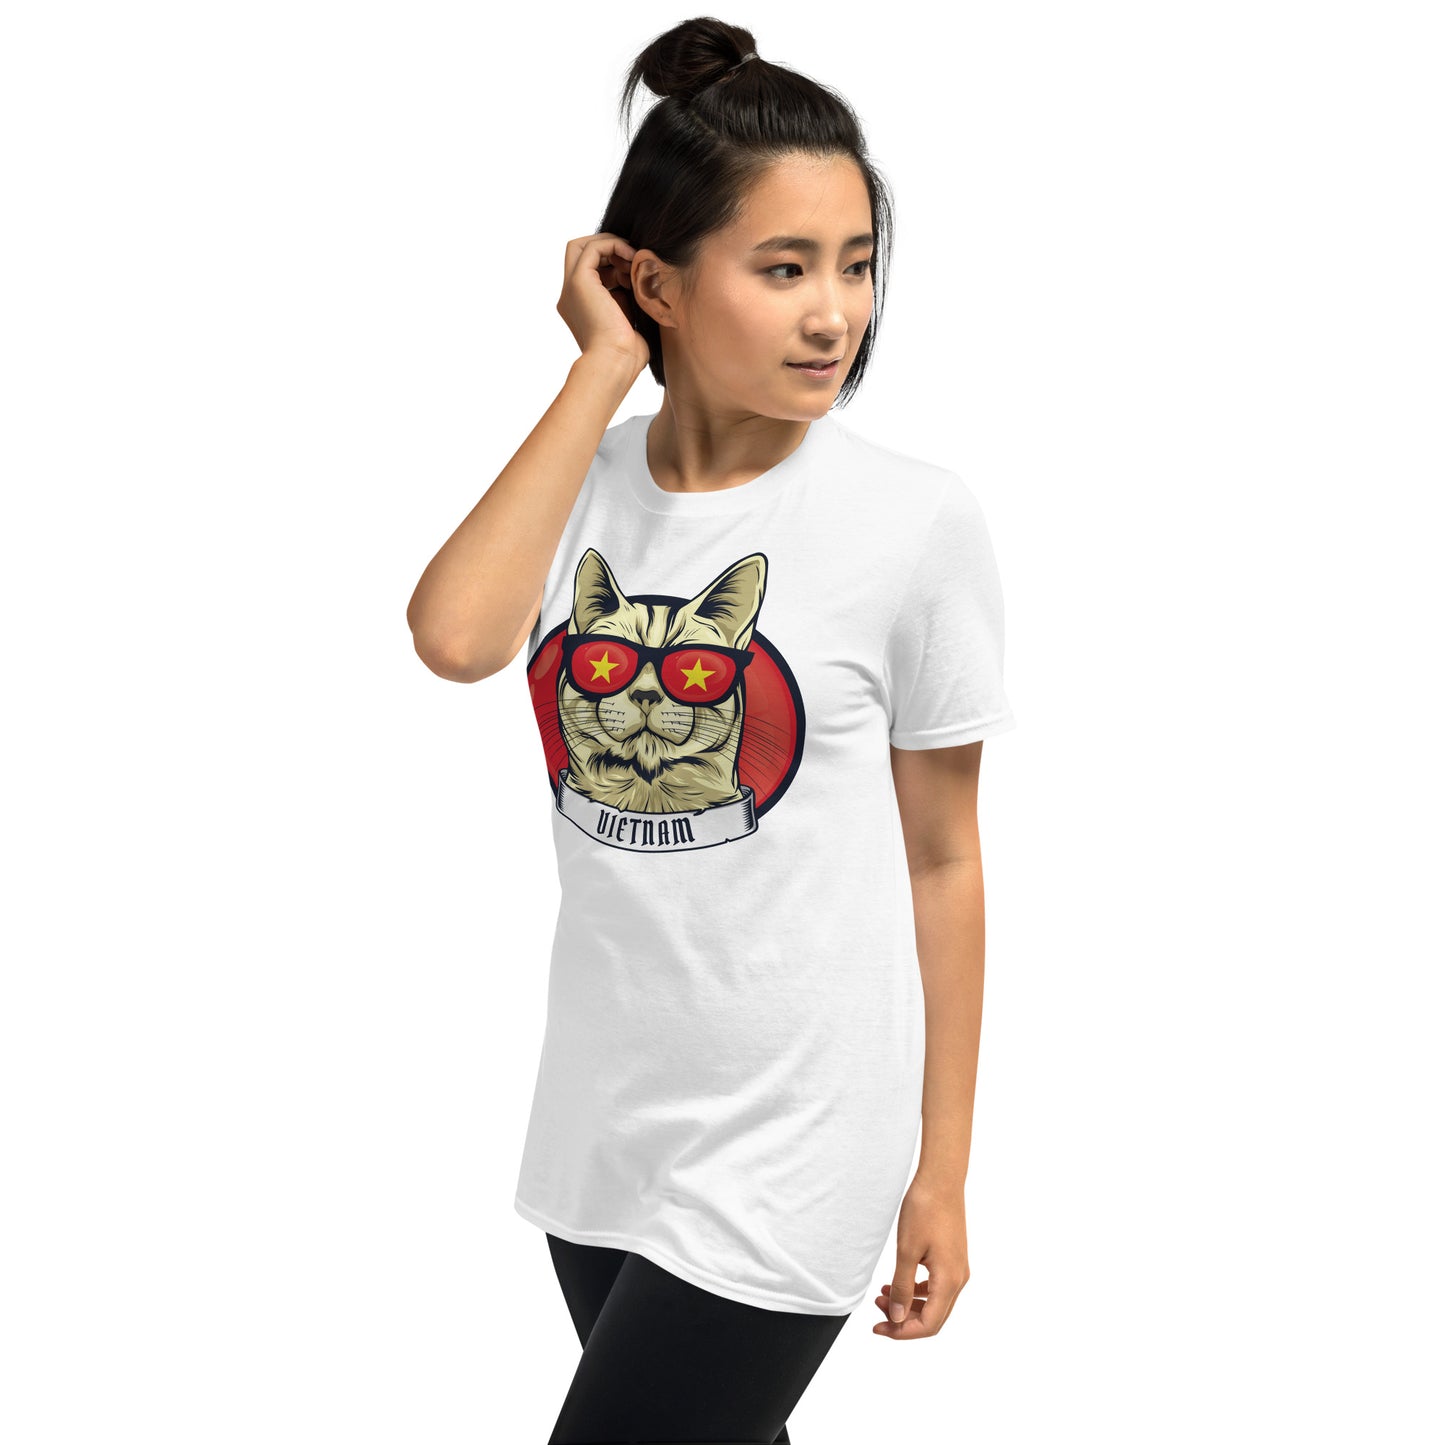 Vietnamese Inspired Cat Design T-Shirt - Perfect for Cat Lovers Worldwide